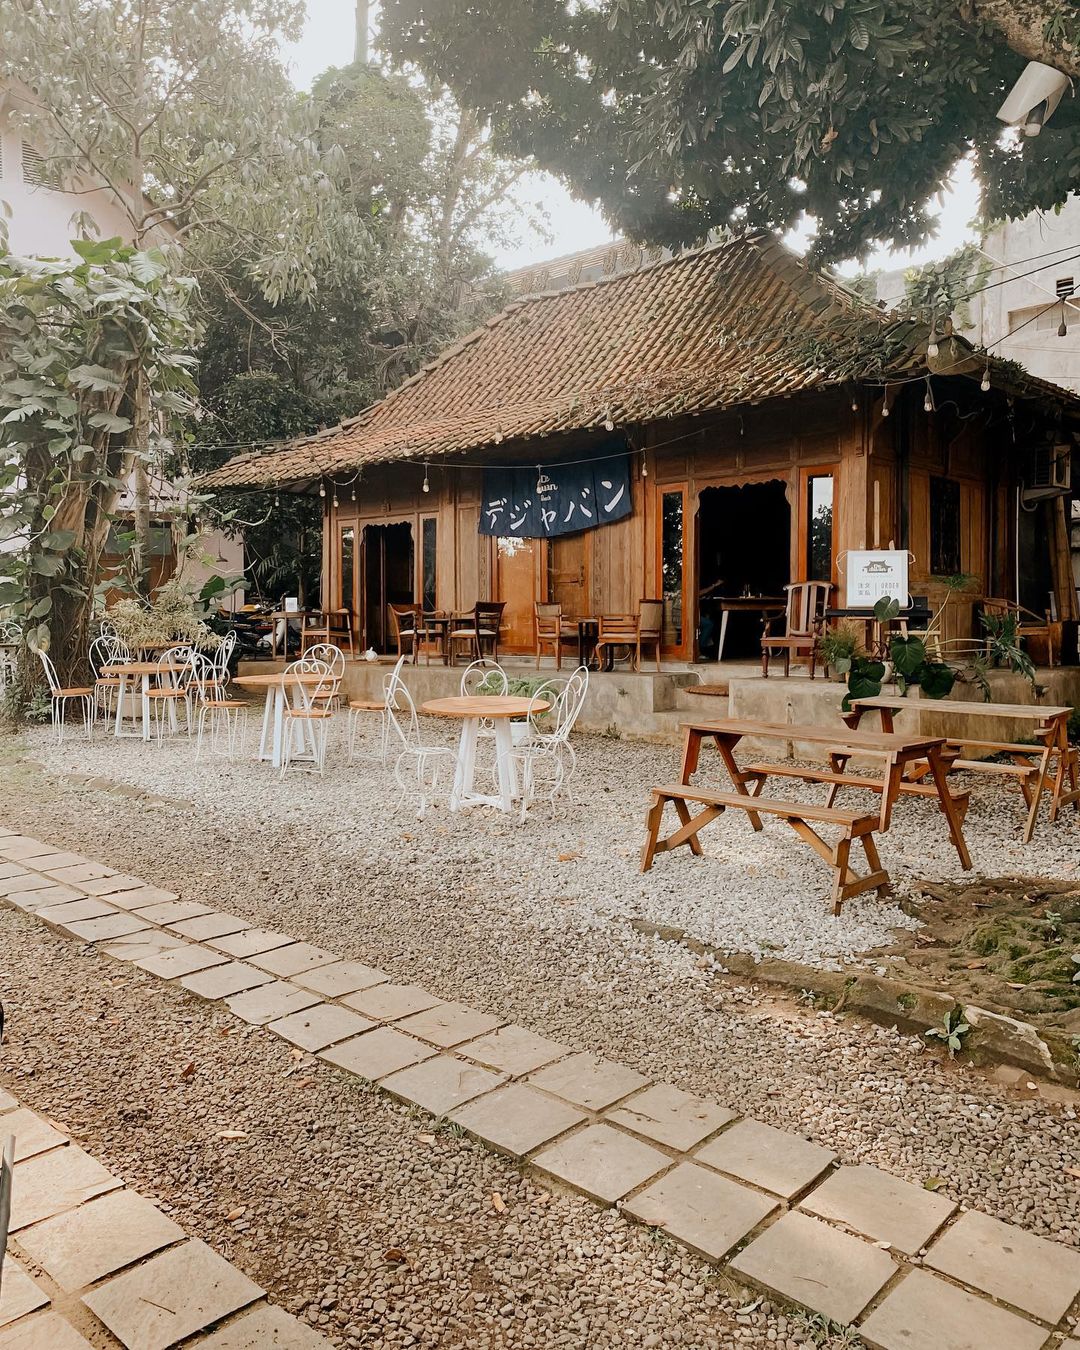 Jam Buka De Javan Coffee Eatery Bandung Image From @acaffeinman